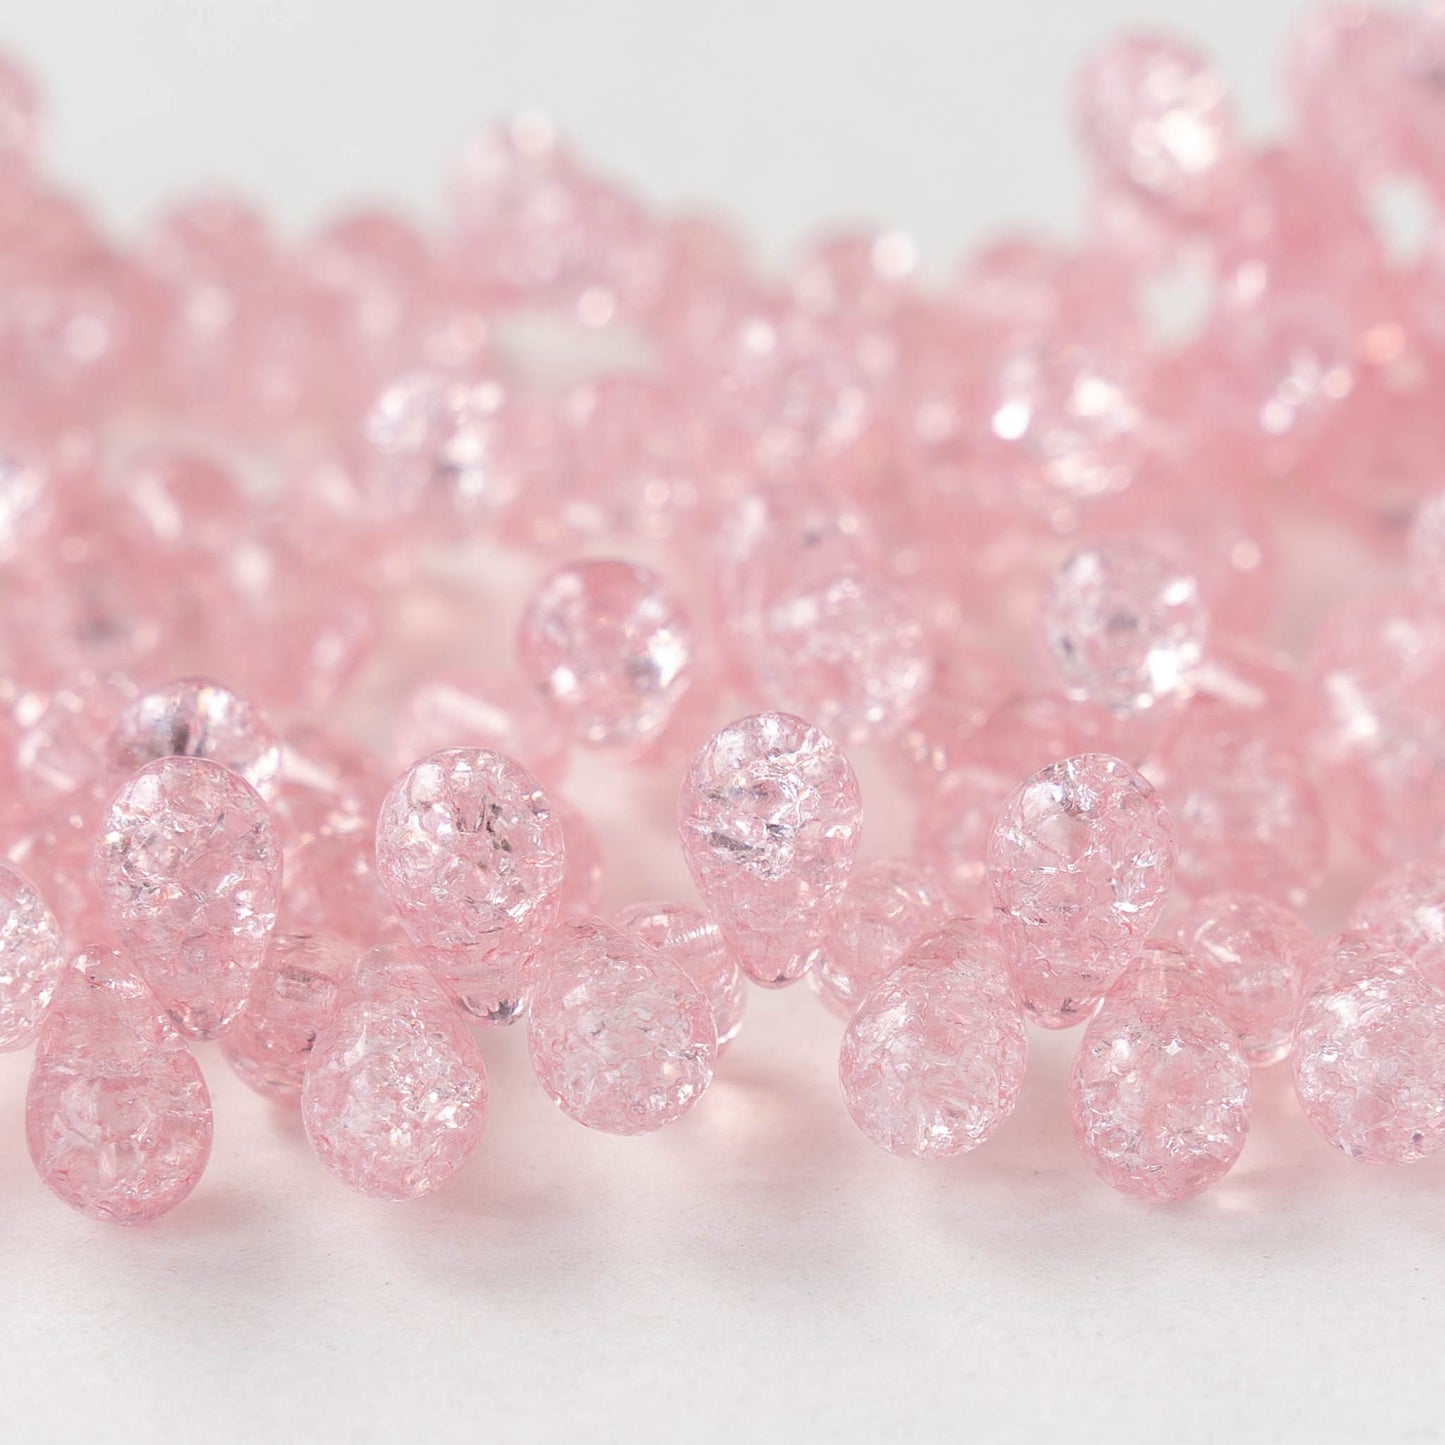 6x9mm Glass Teardrop Beads - Pink Crackle  - 50 Beads